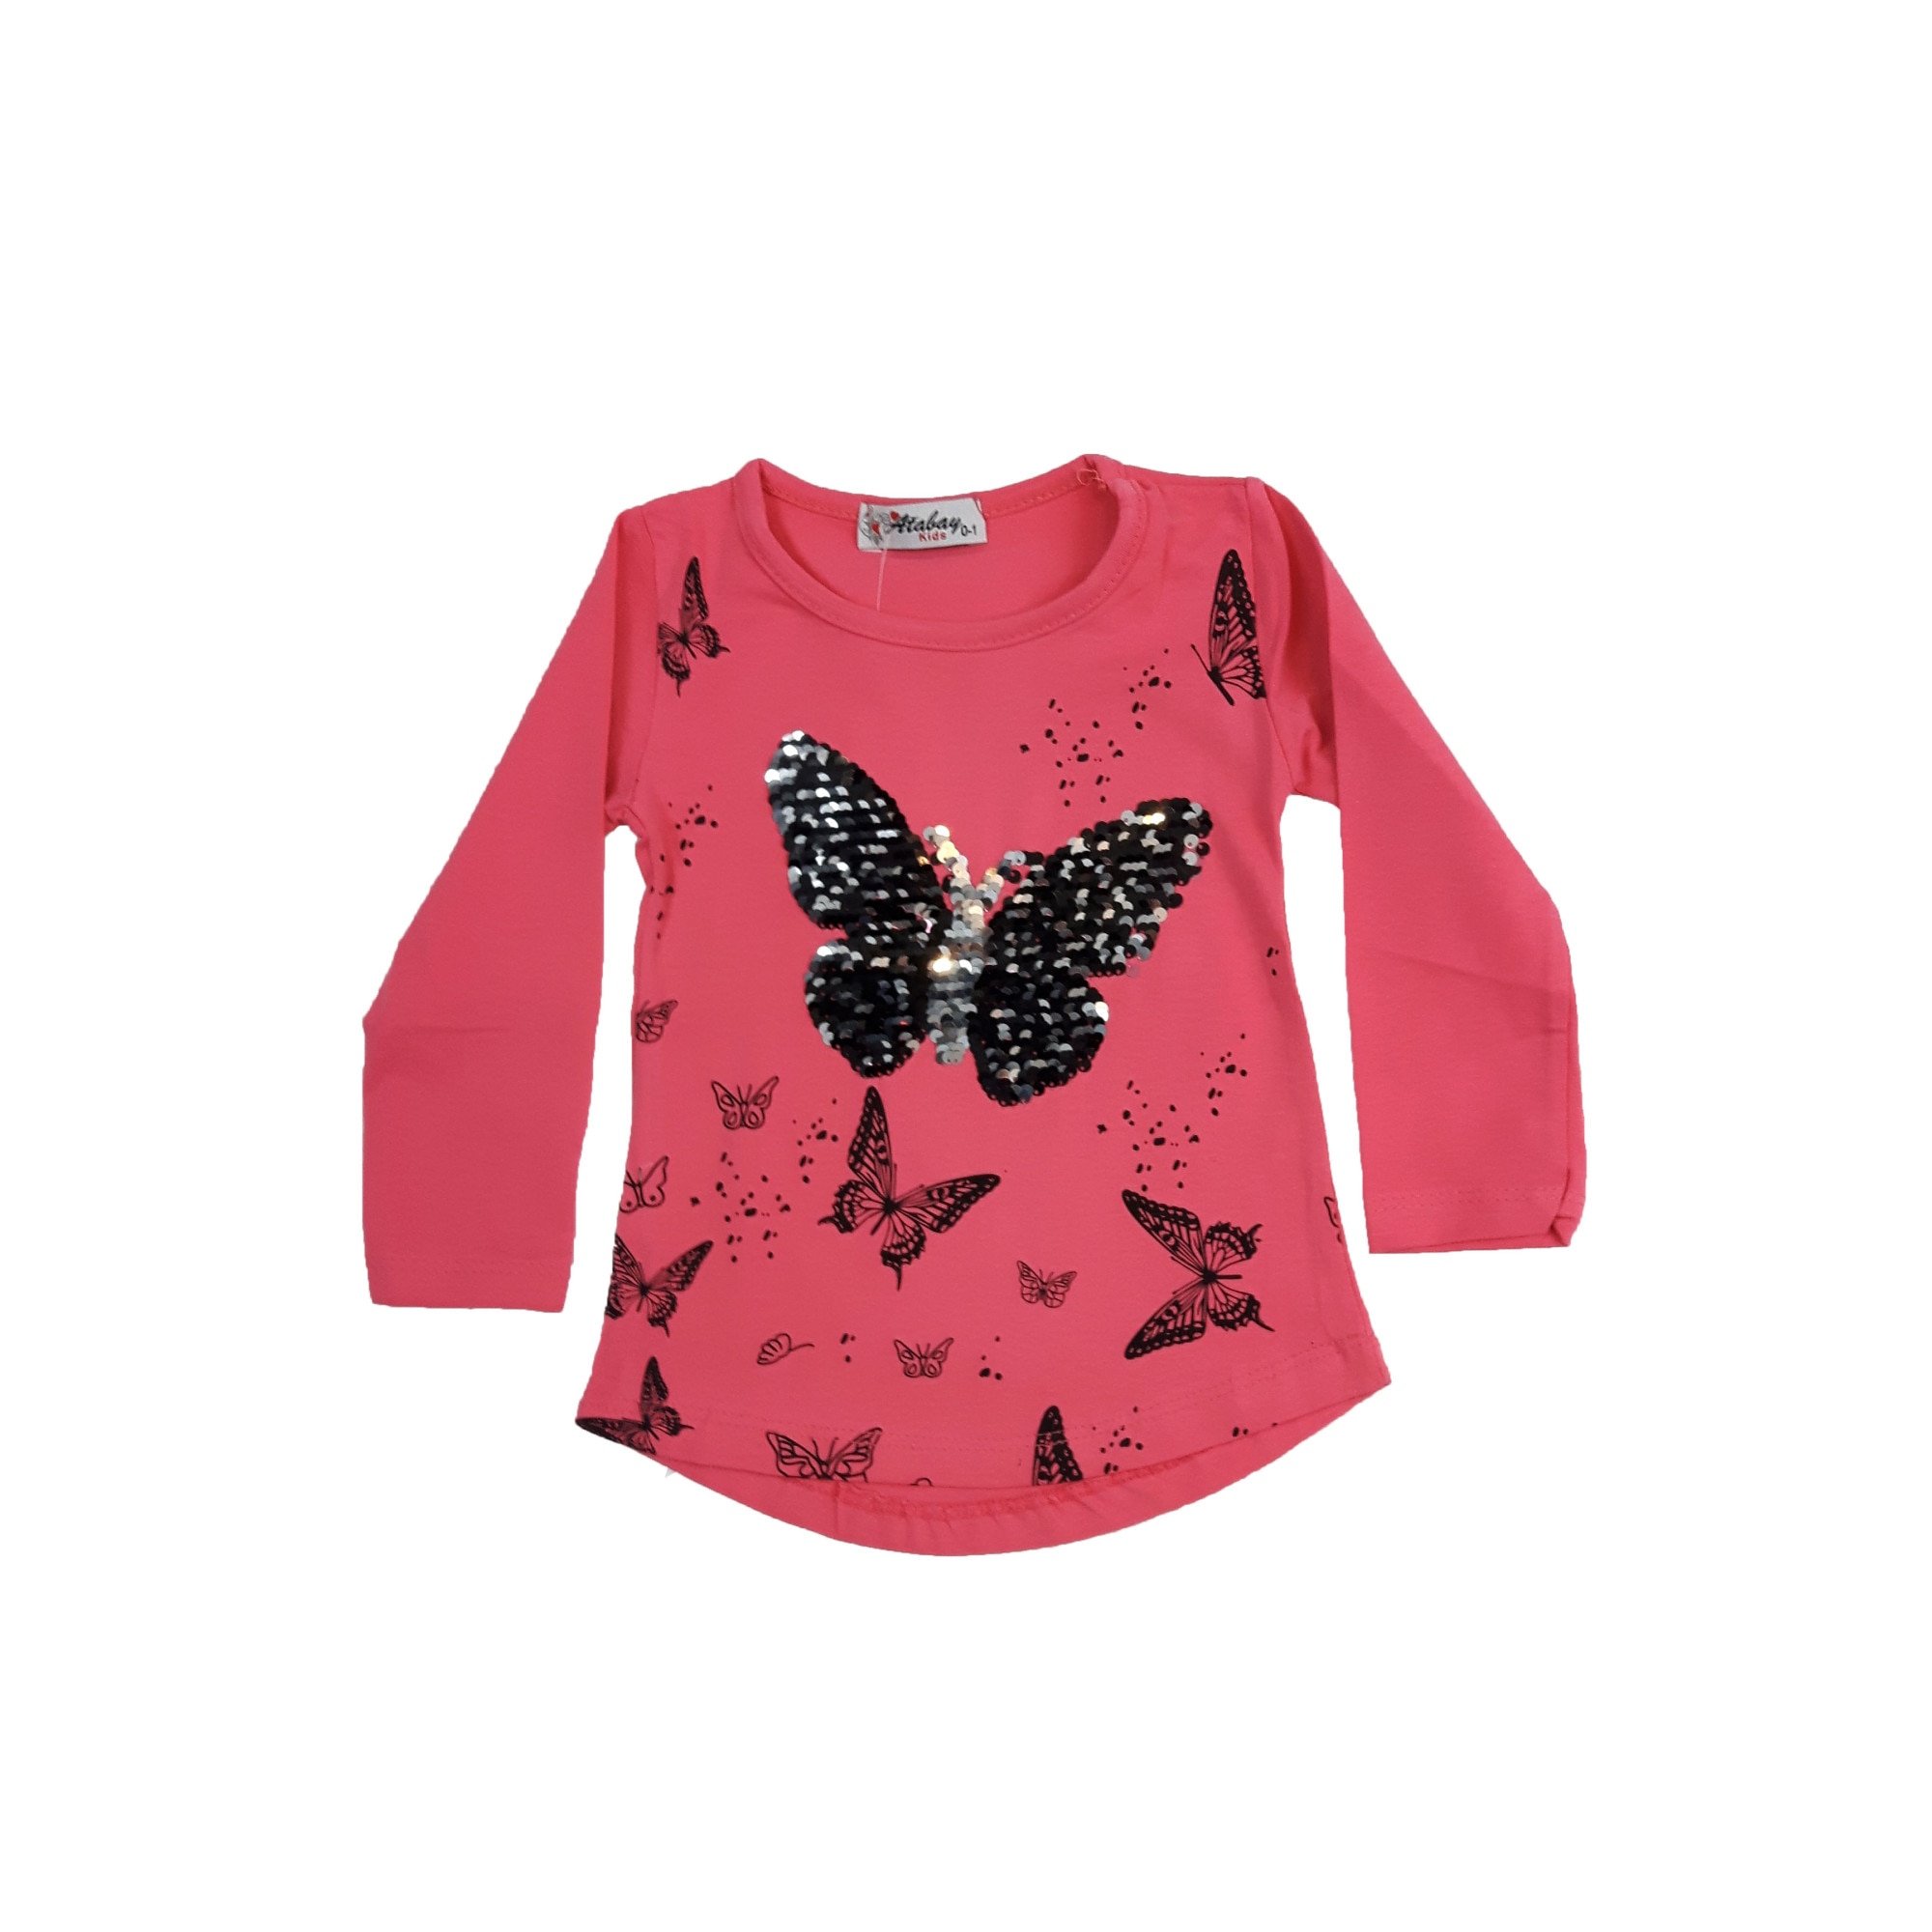 Nomination teenager Taxation Bluza cu model fluture, culoare roz, din paiete reversibile pentru fete 1  an - eMAG.ro